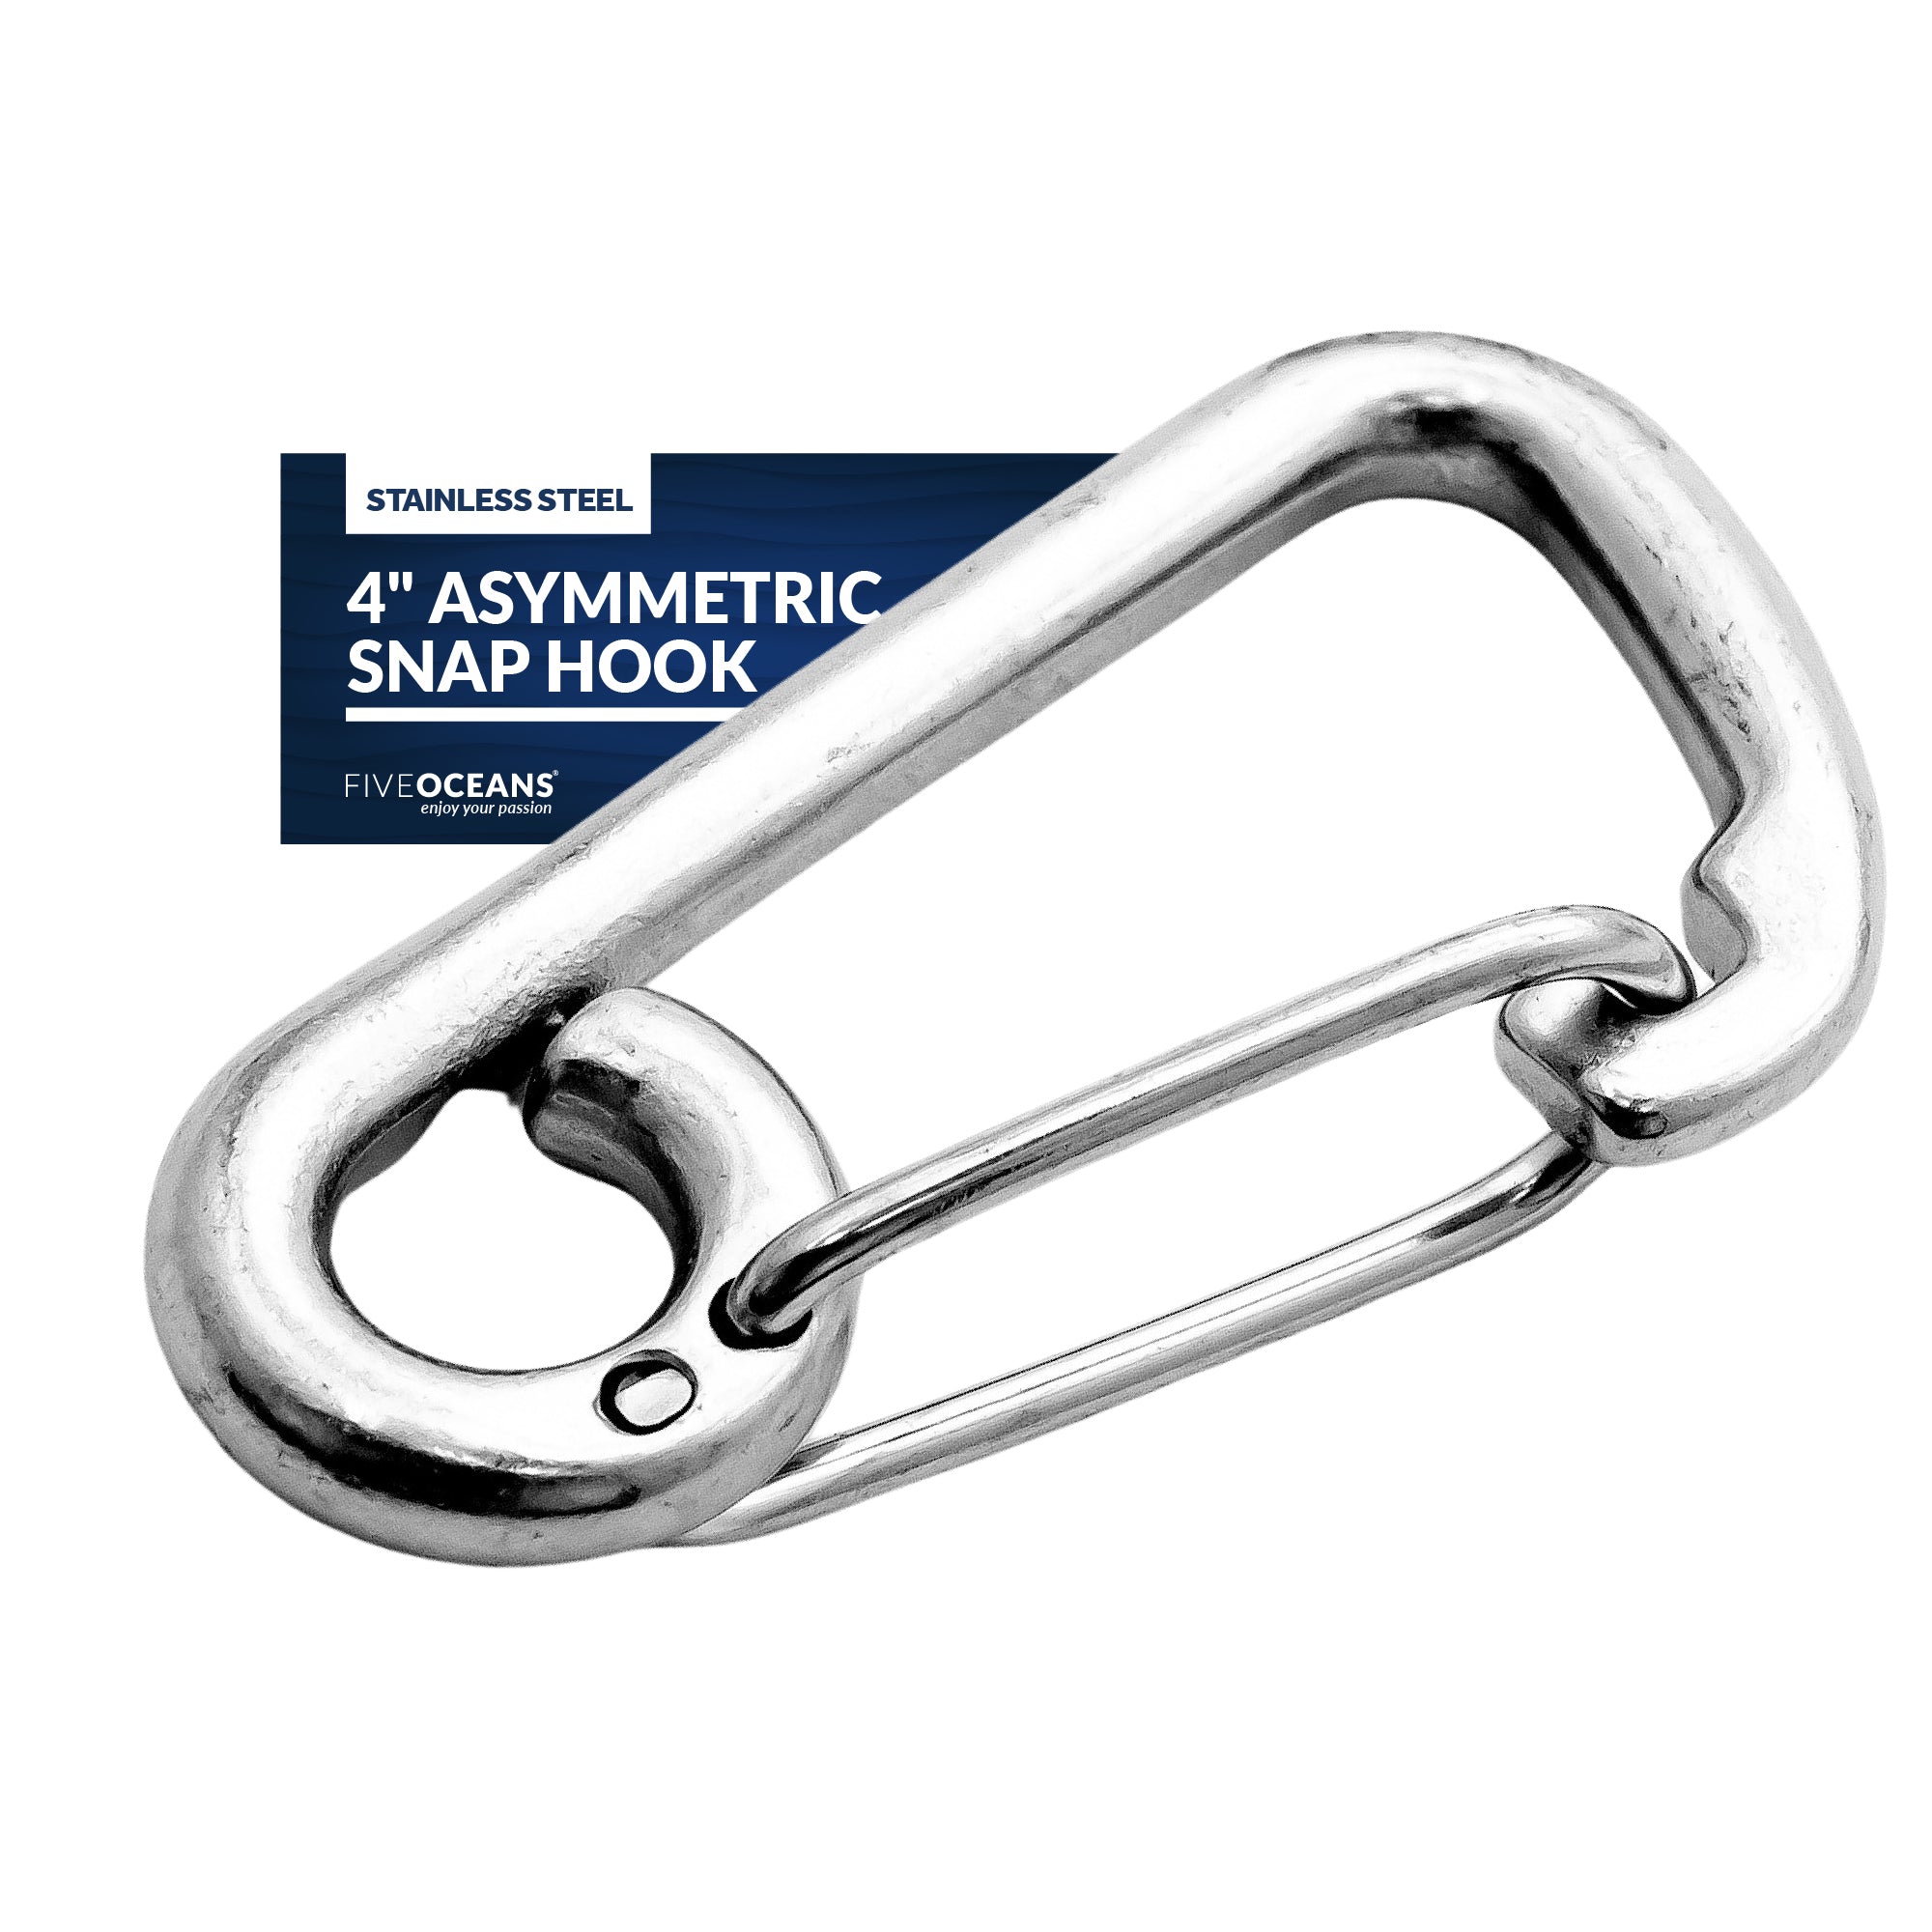 Asymmetric Snap Hook, Stainless Steel, 4" - FO466